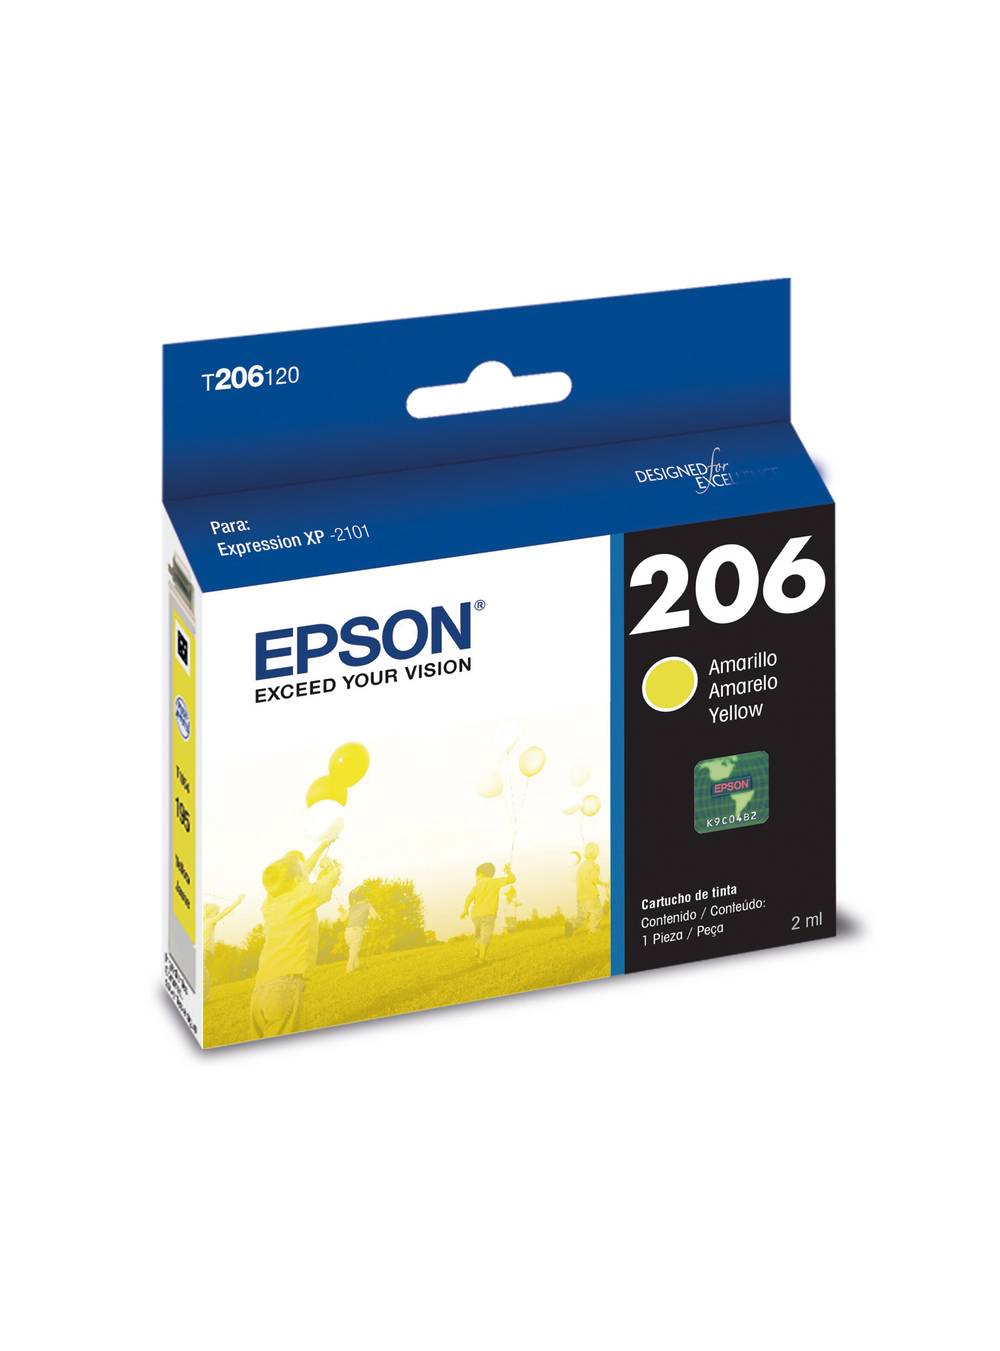 Epson tinta amarillo t206420-al (1 un)